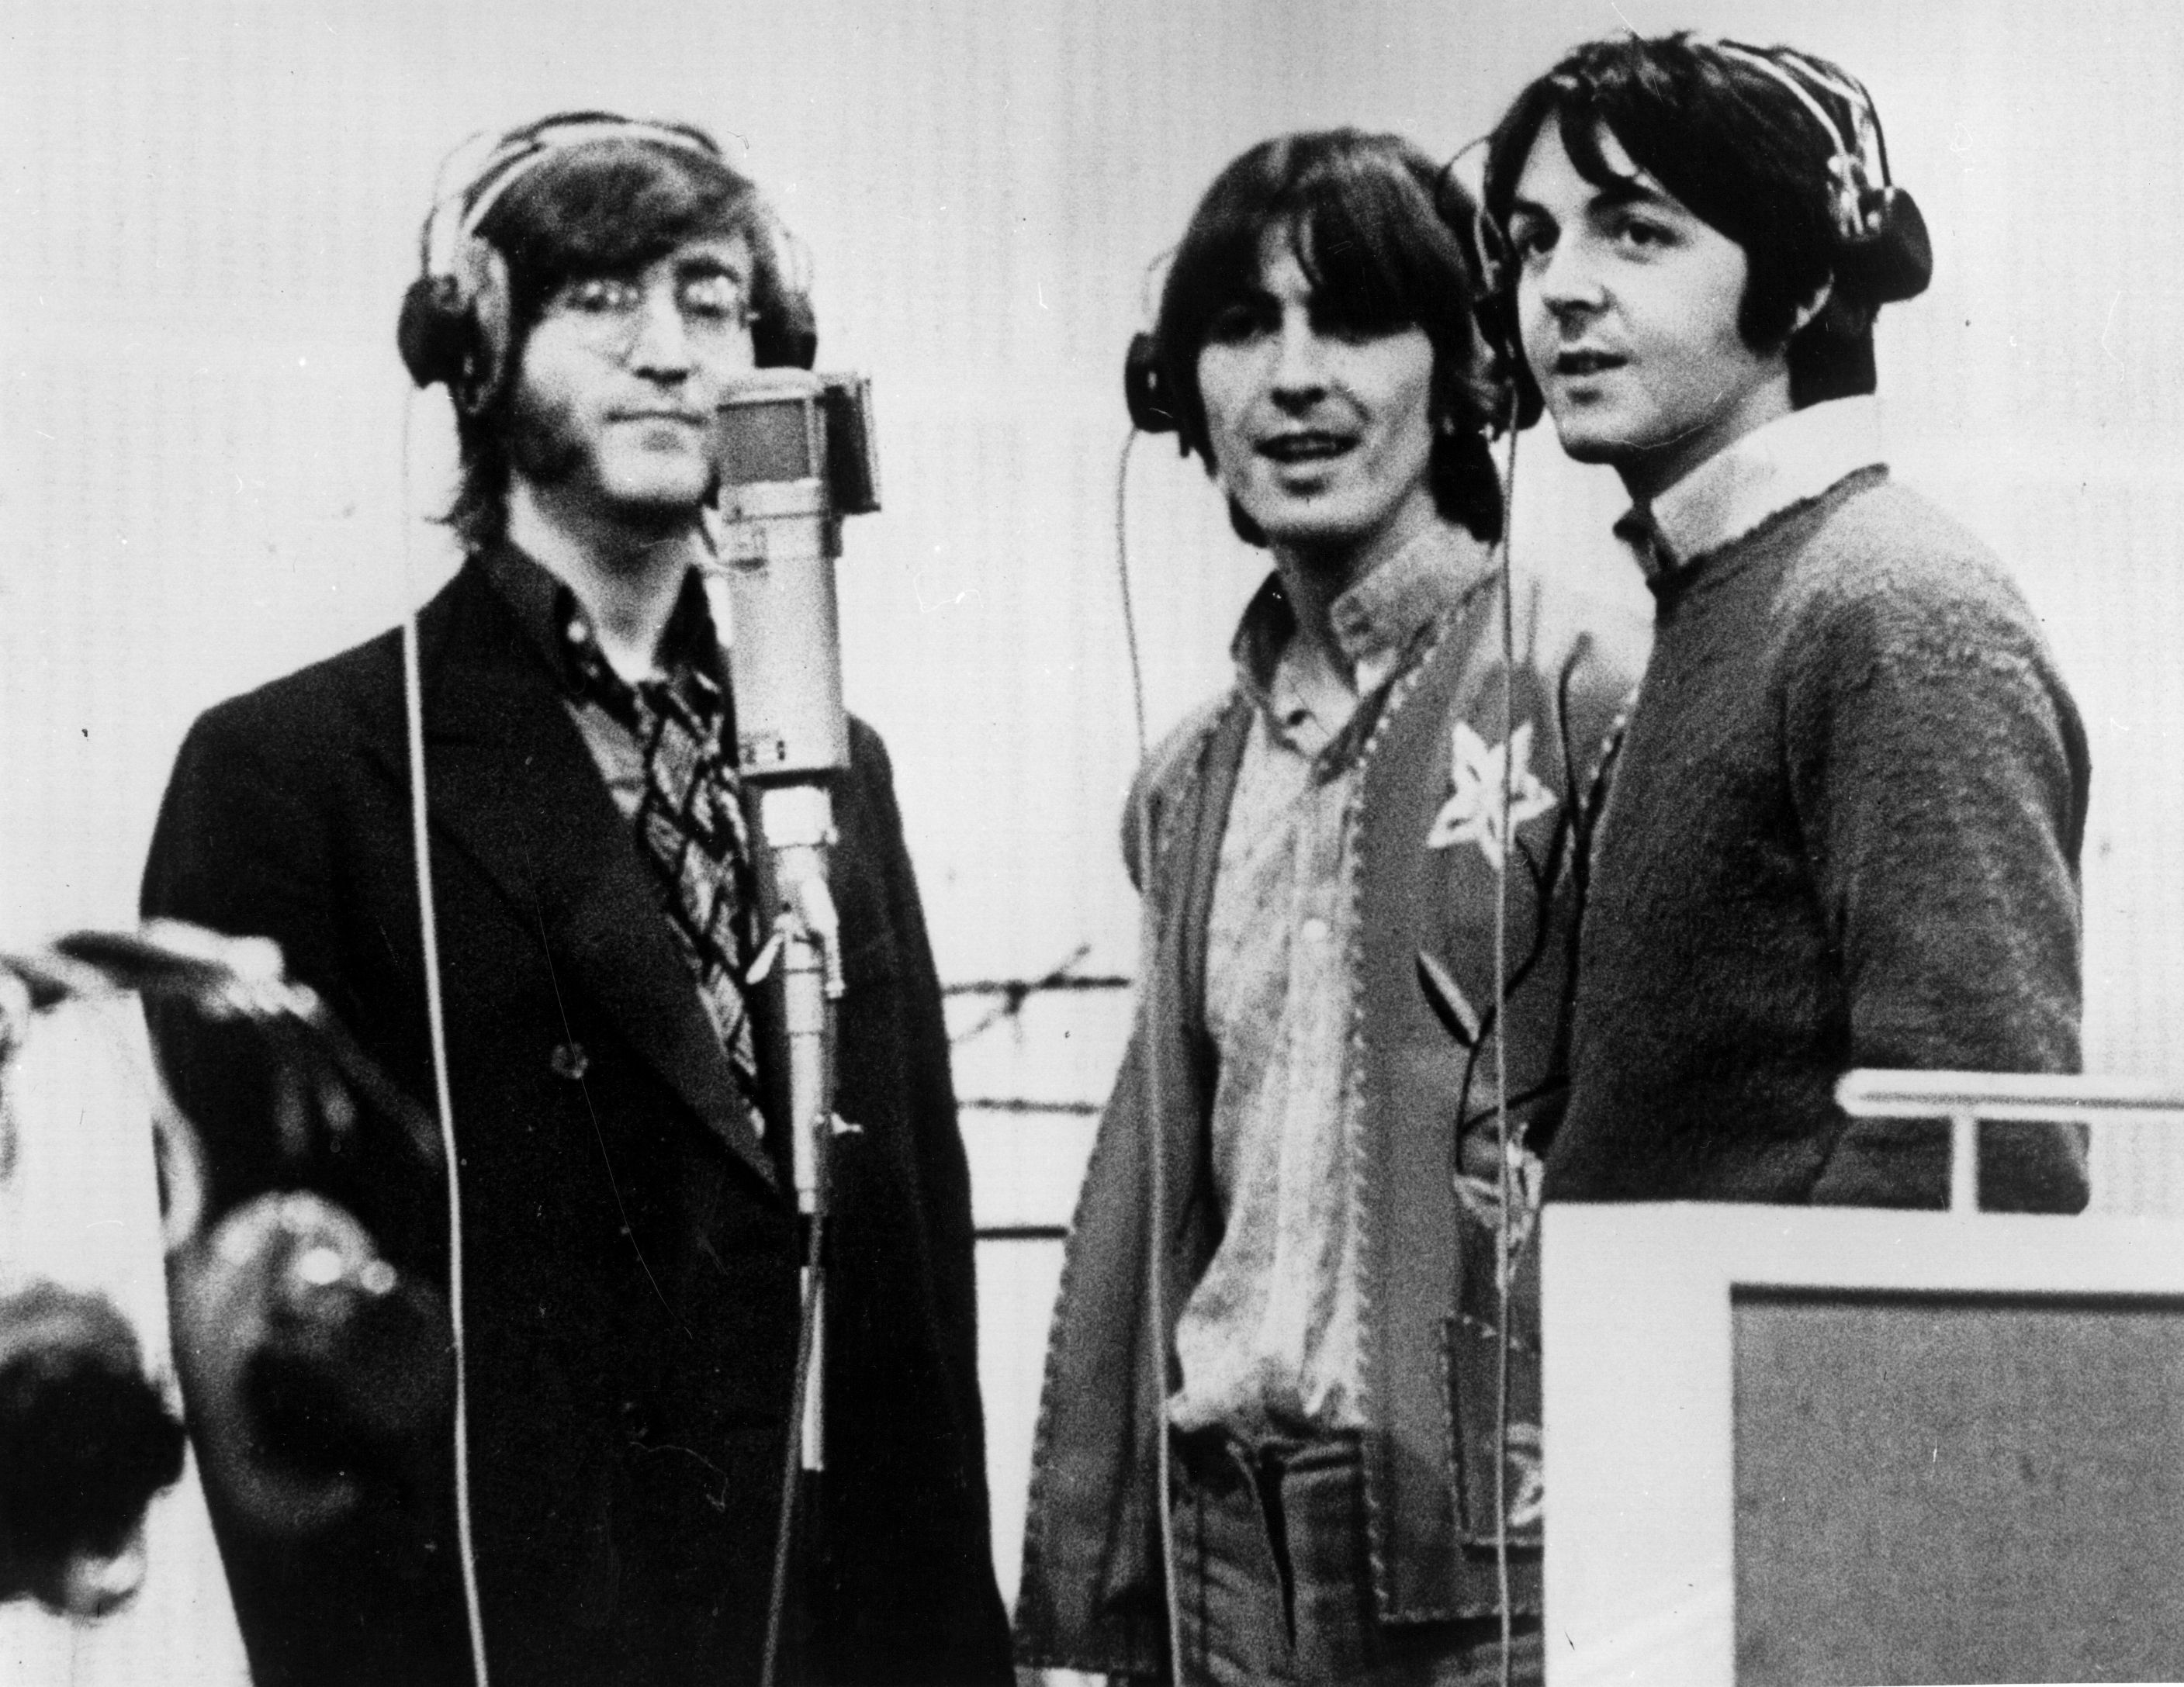 The Beatles’ John Lennon, George Harrison, and Paul McCartney near a microphone